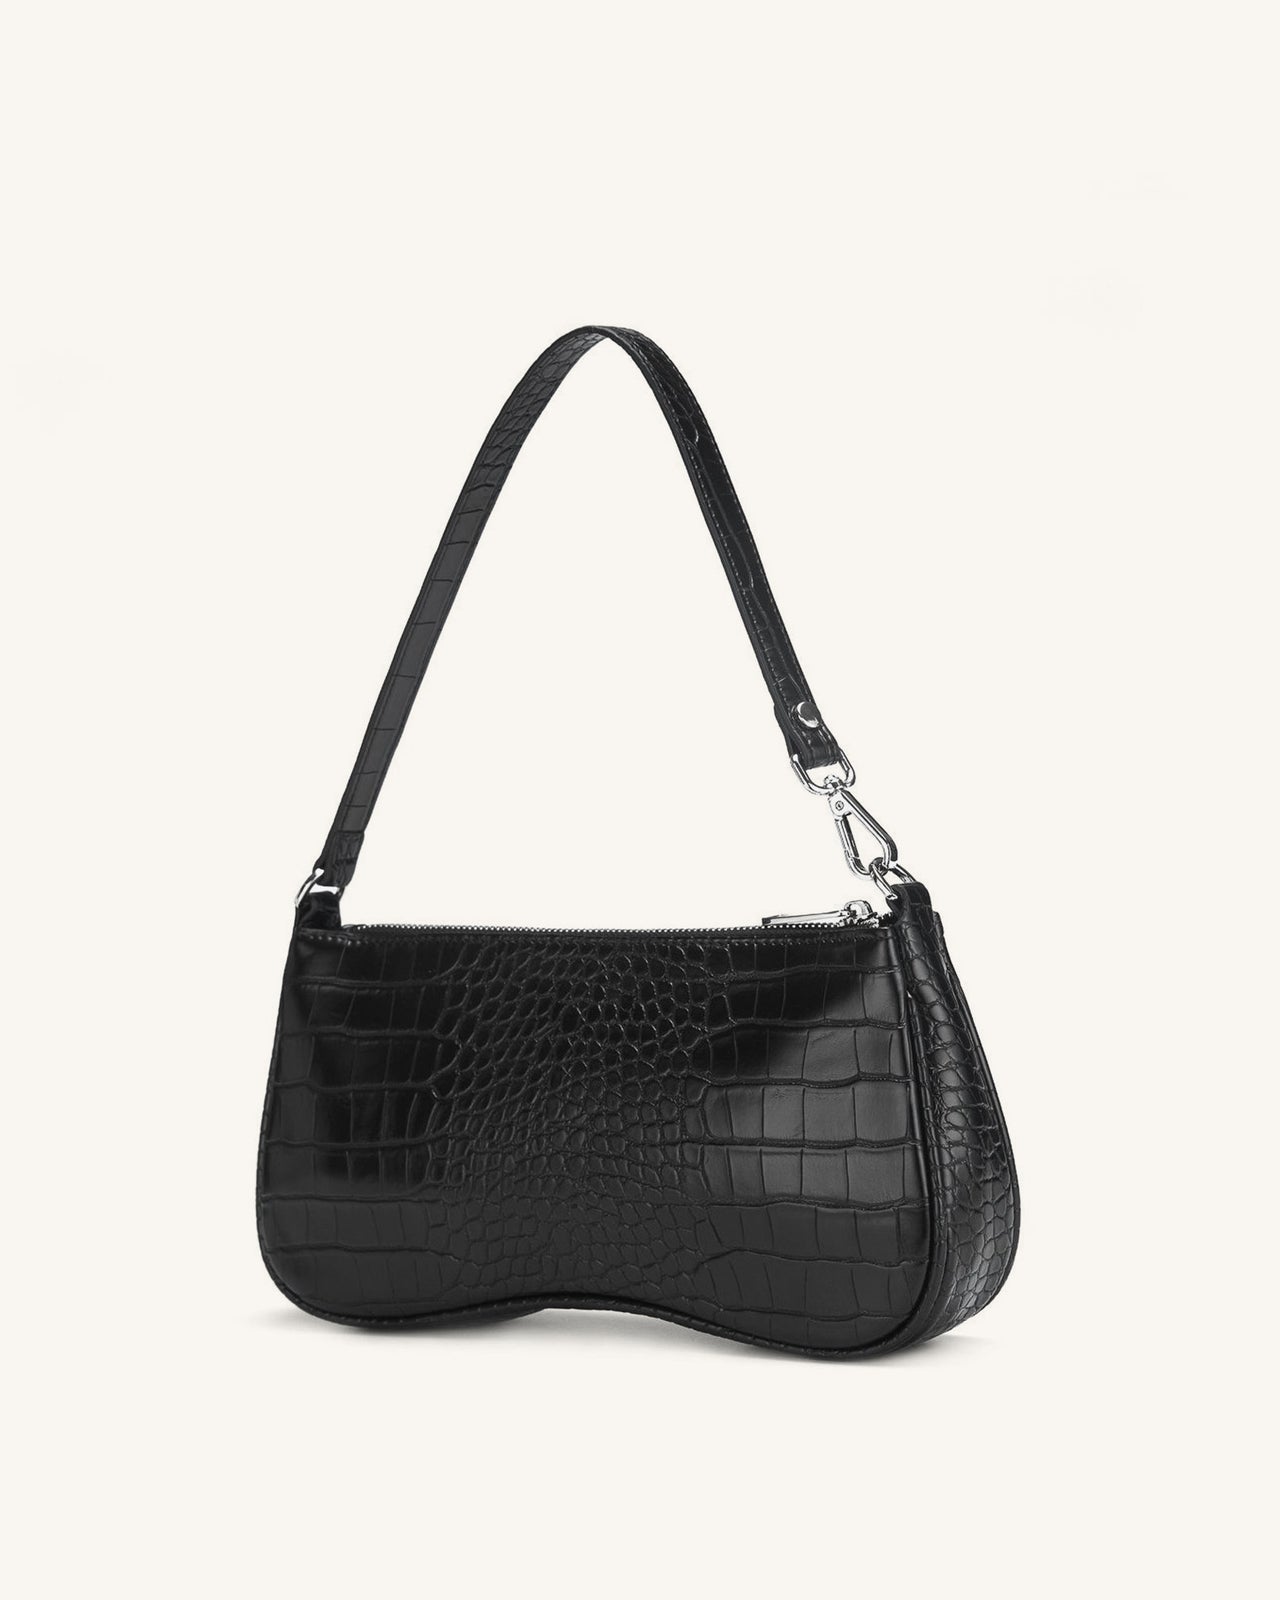 FEI Checkerboard Mini Tote Bag - Yellow & White - Fashion Women Vegan Bag Online Shopping - JW Pei